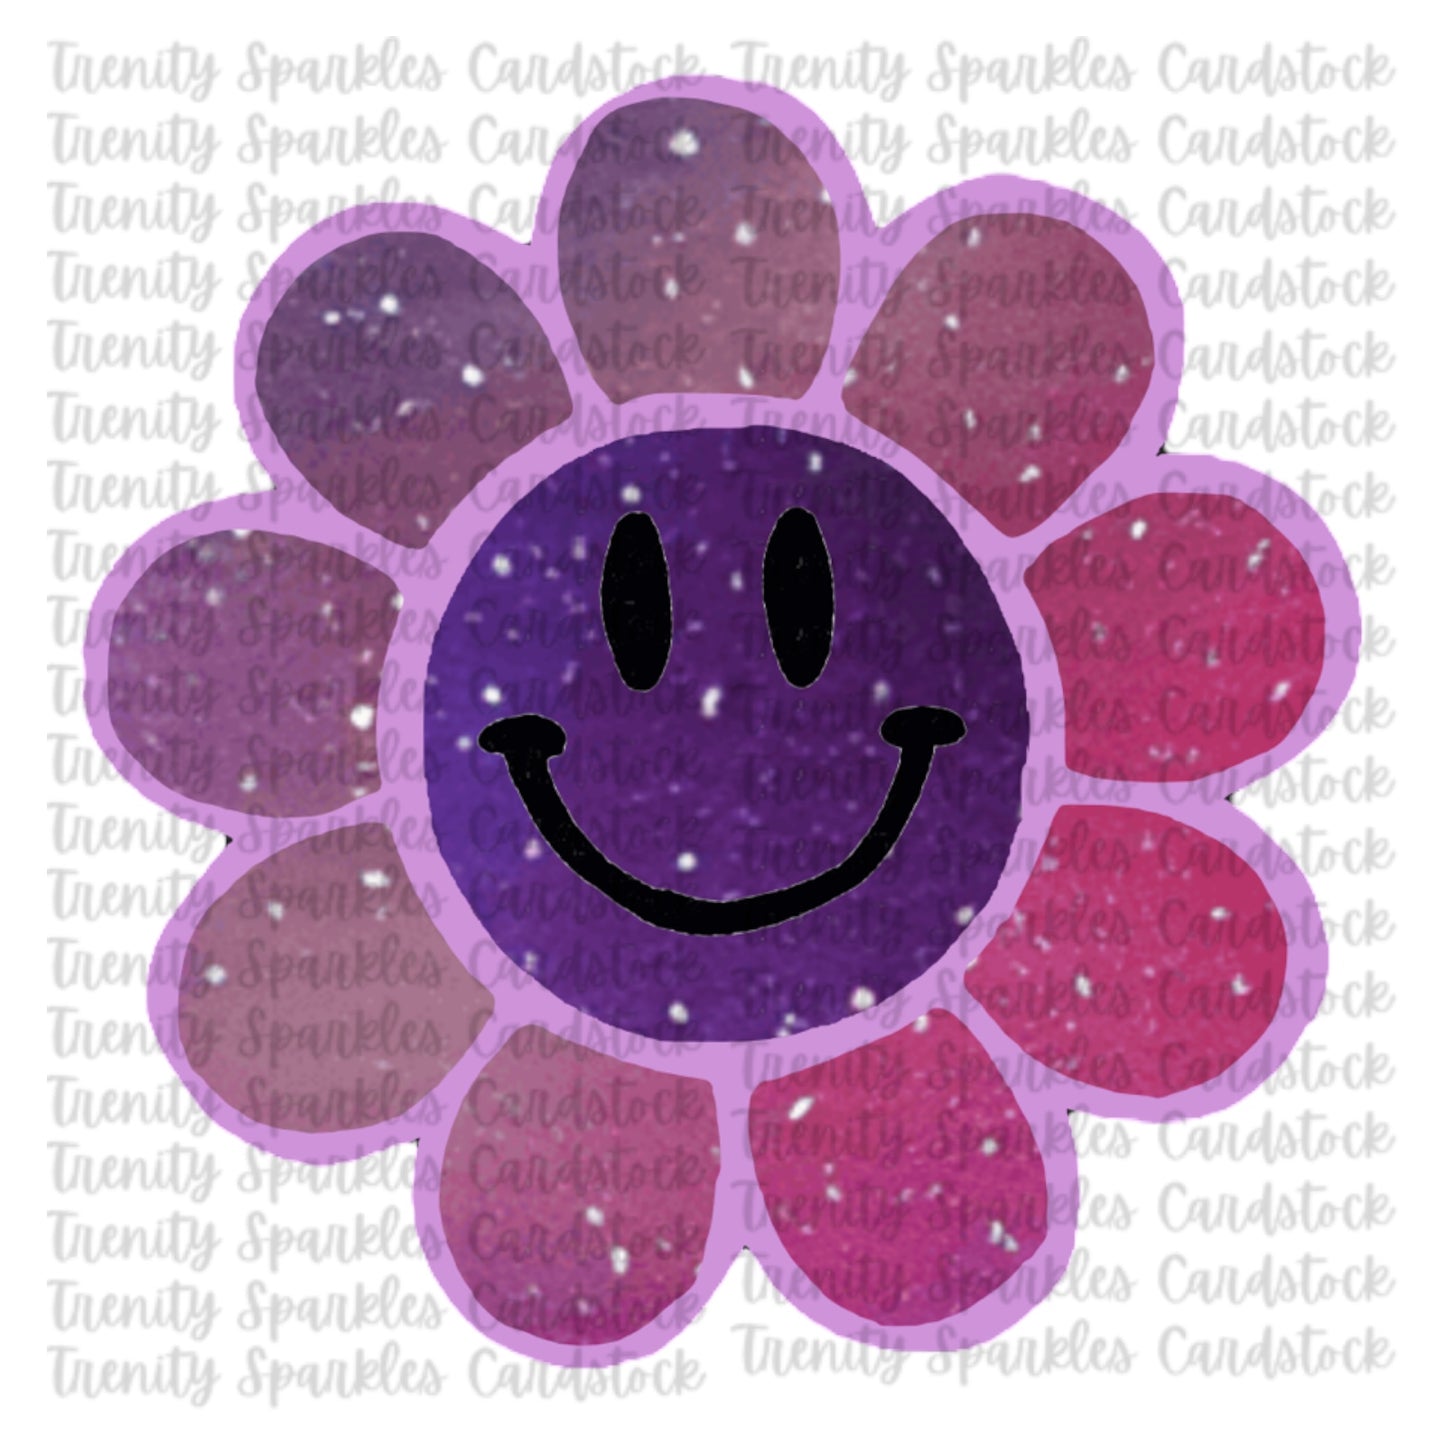 Kay J & Co Smiley Flower Cardstock